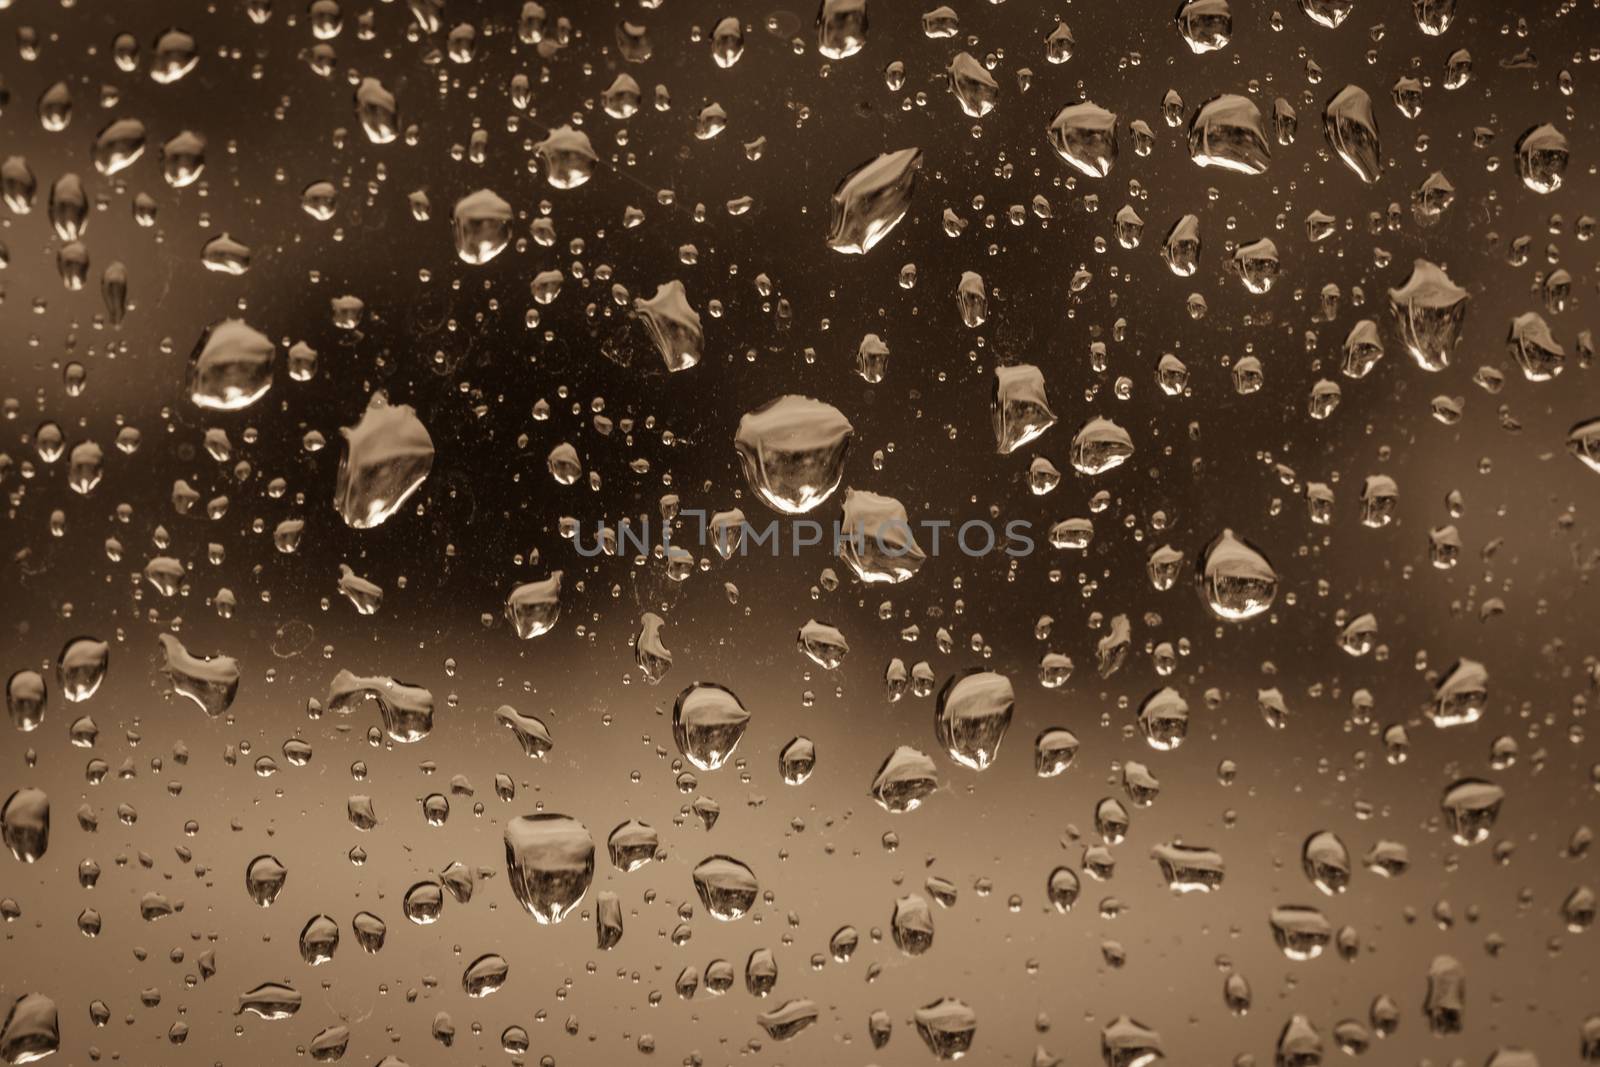 Raindrops on glass by Natstocker